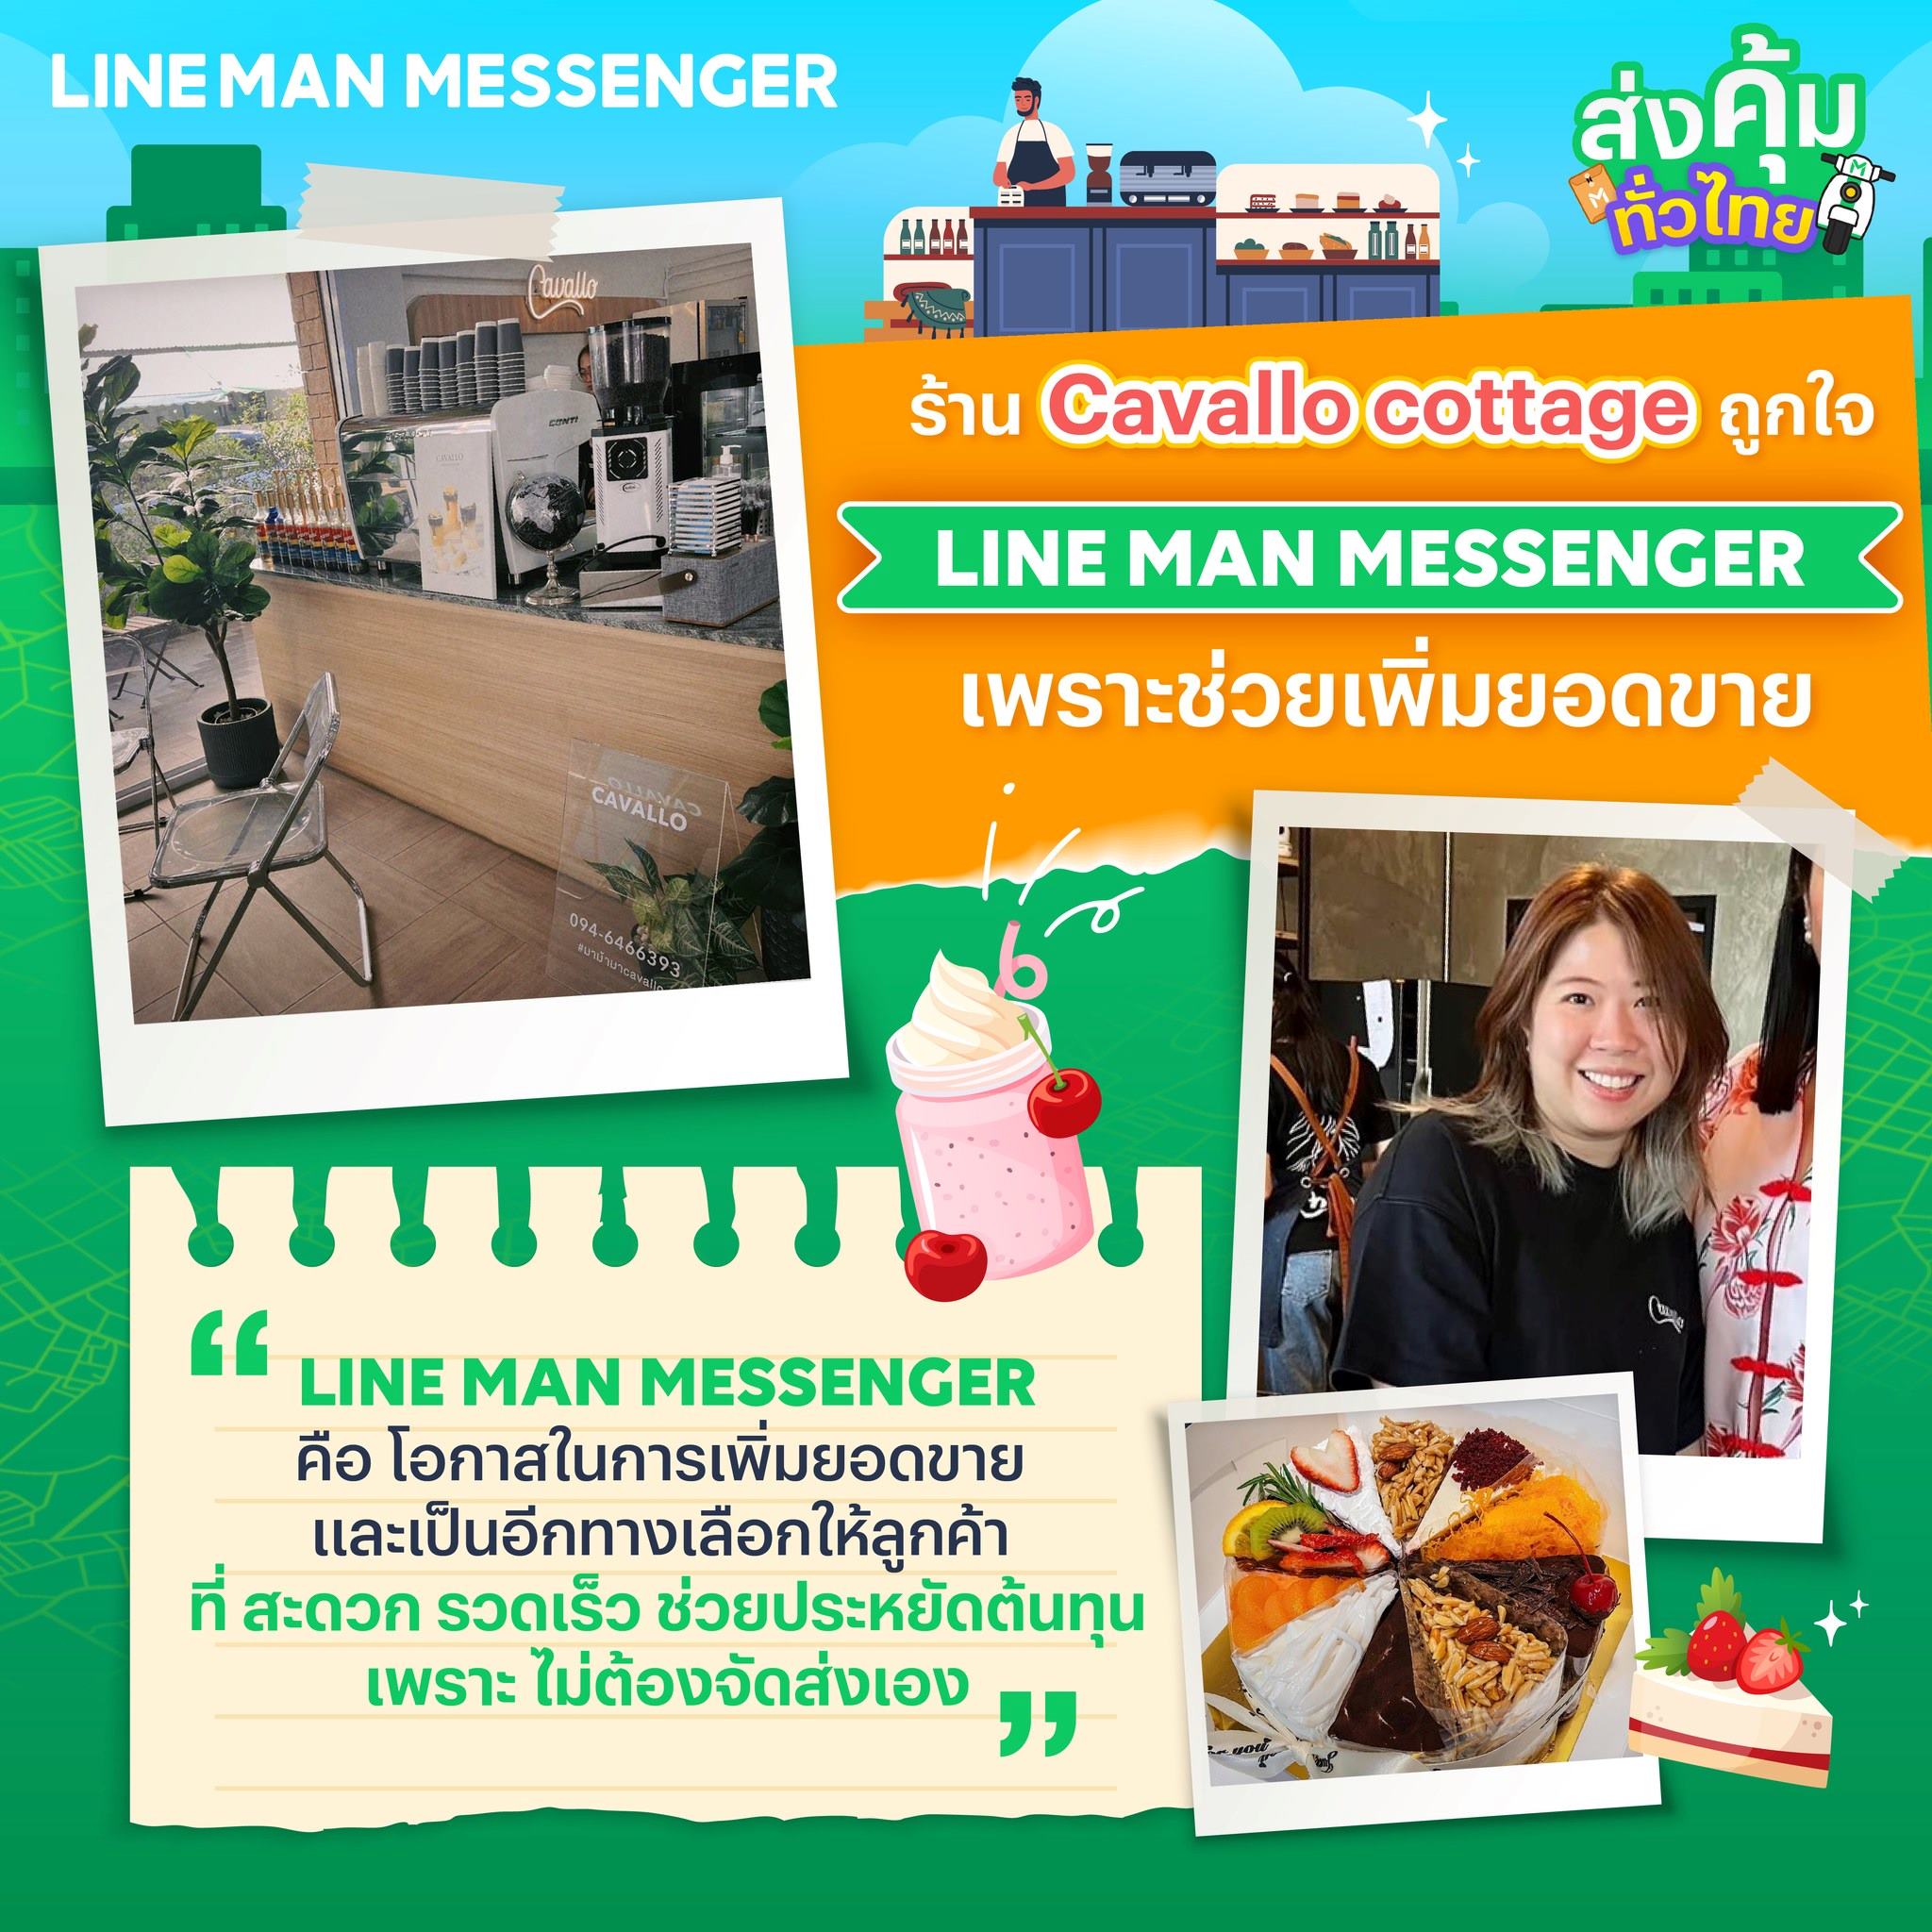 LINE Global - LINE messenger, LINE MAN, LINE TV and many more. We